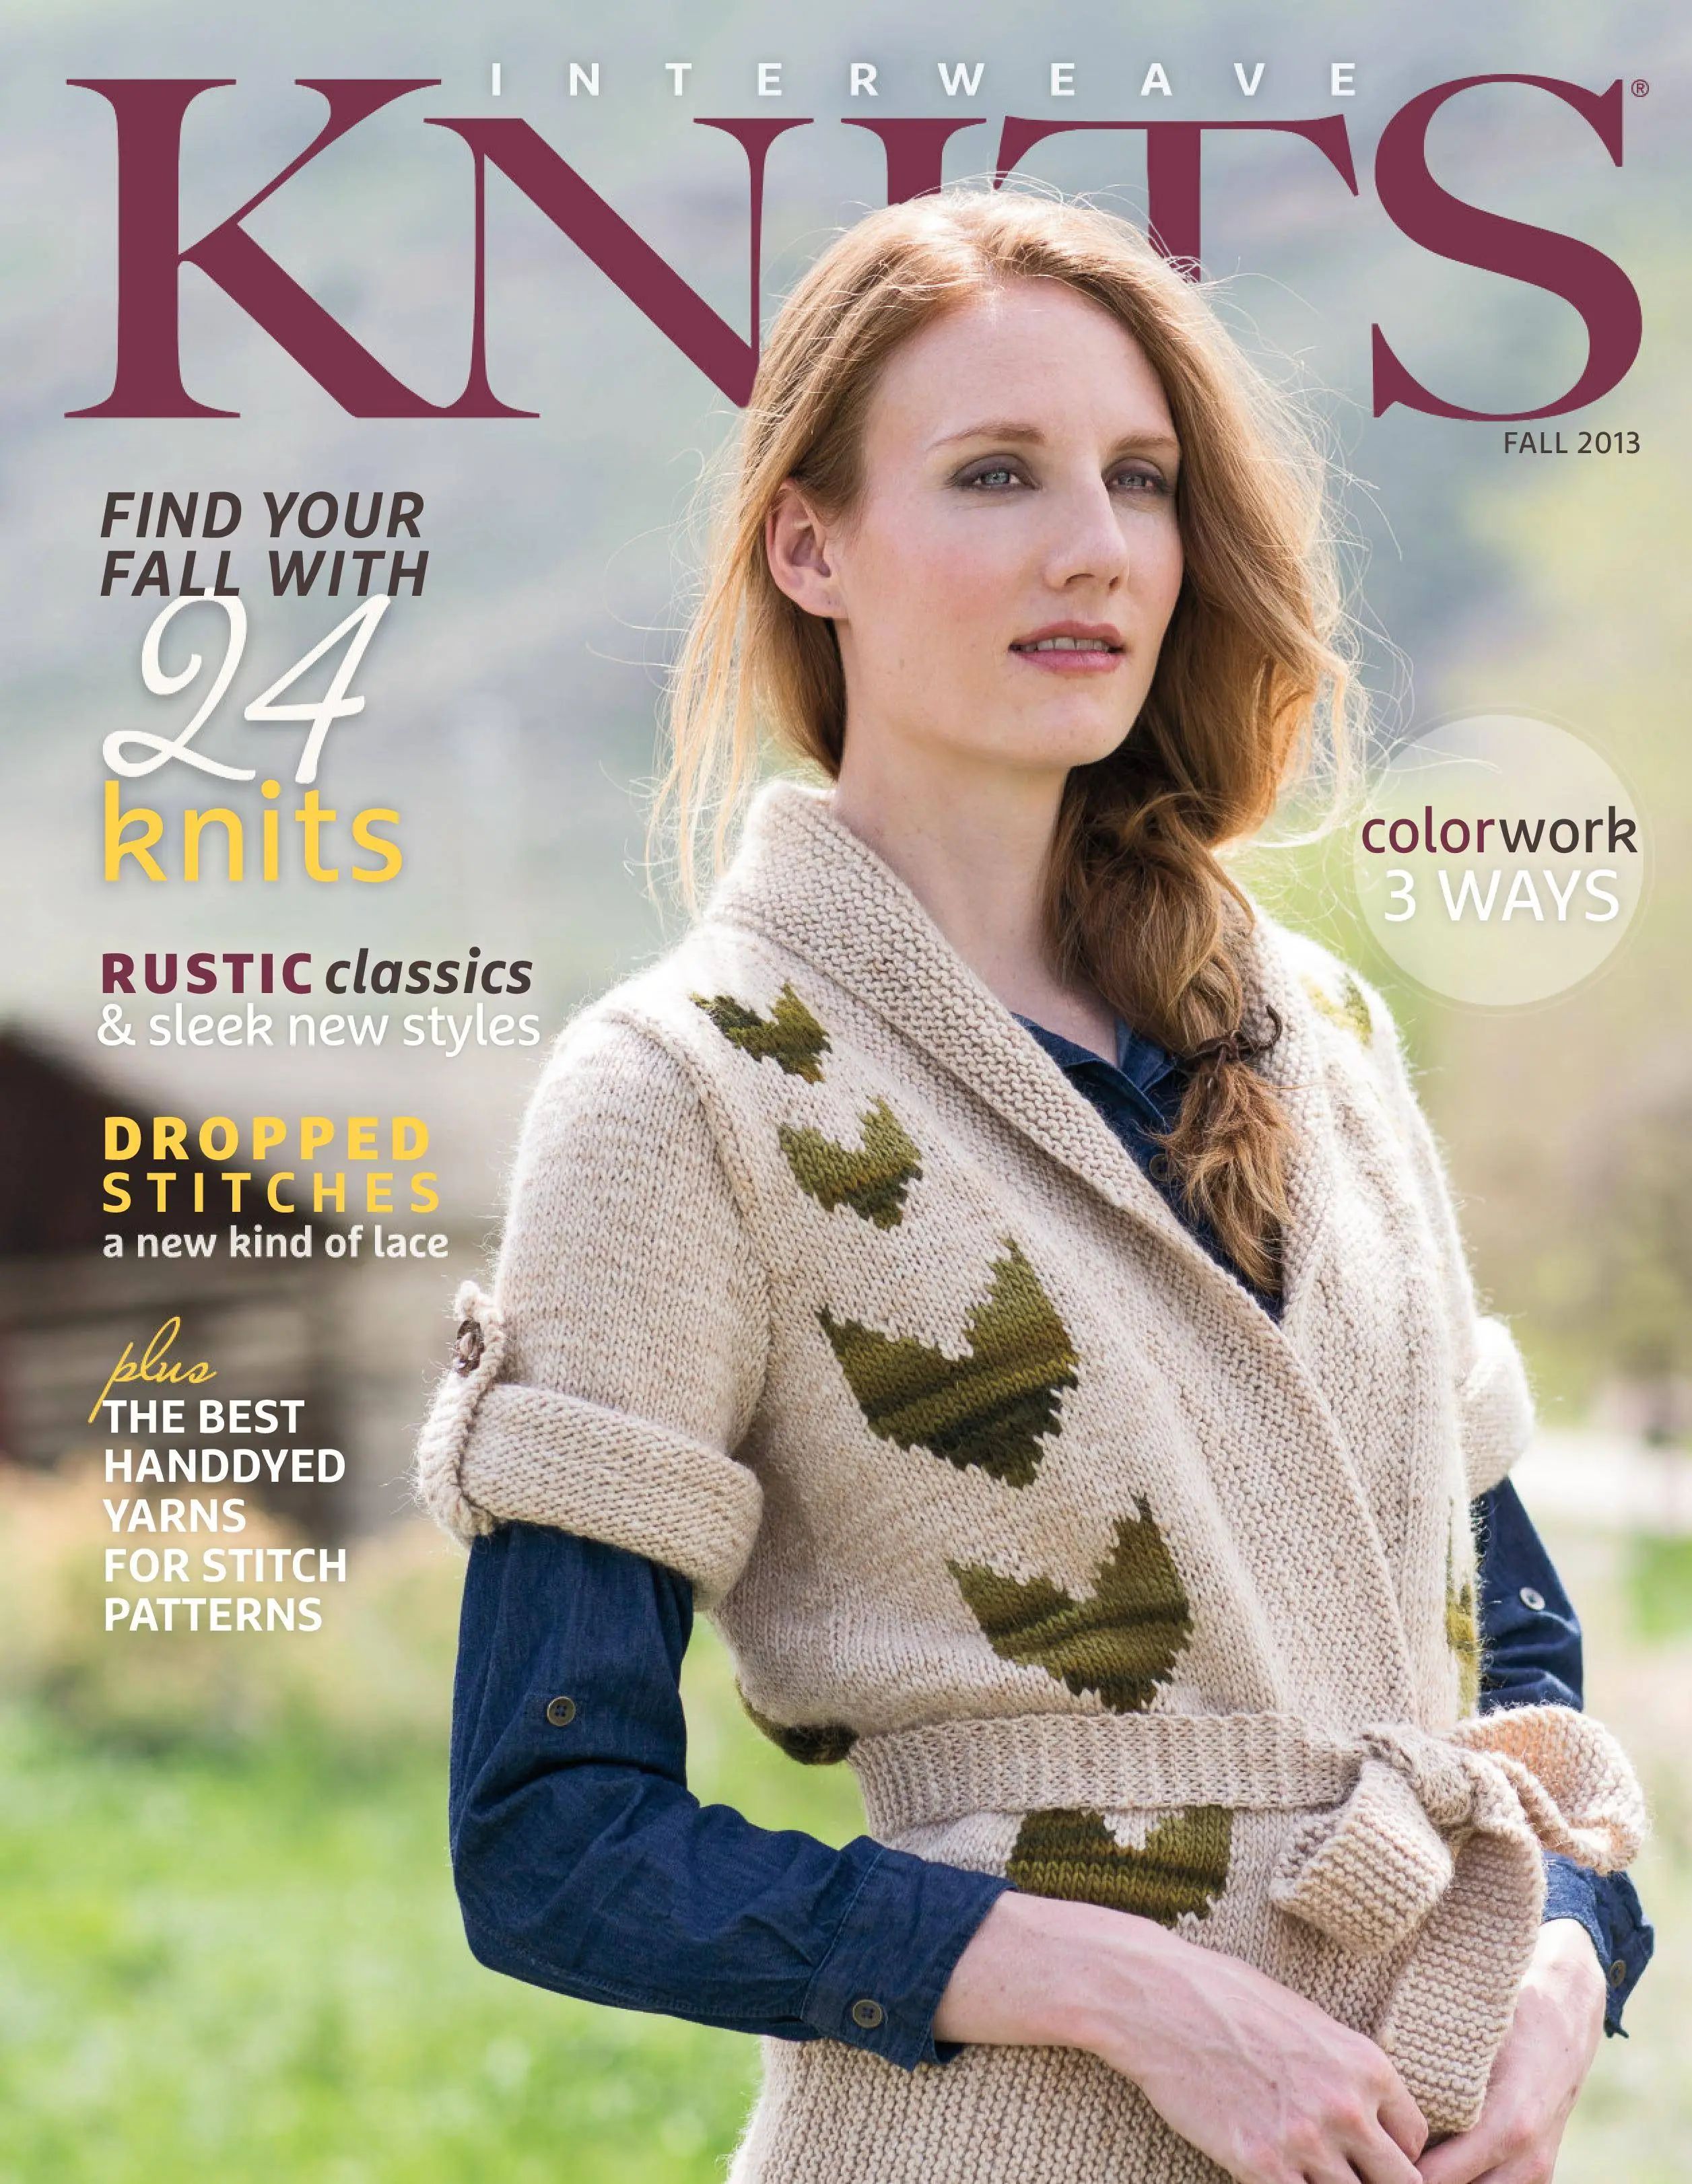 Knit журналы. Knitting журнал. Журнал Knits. Журнал вязание. Журнал для вязания Knit.